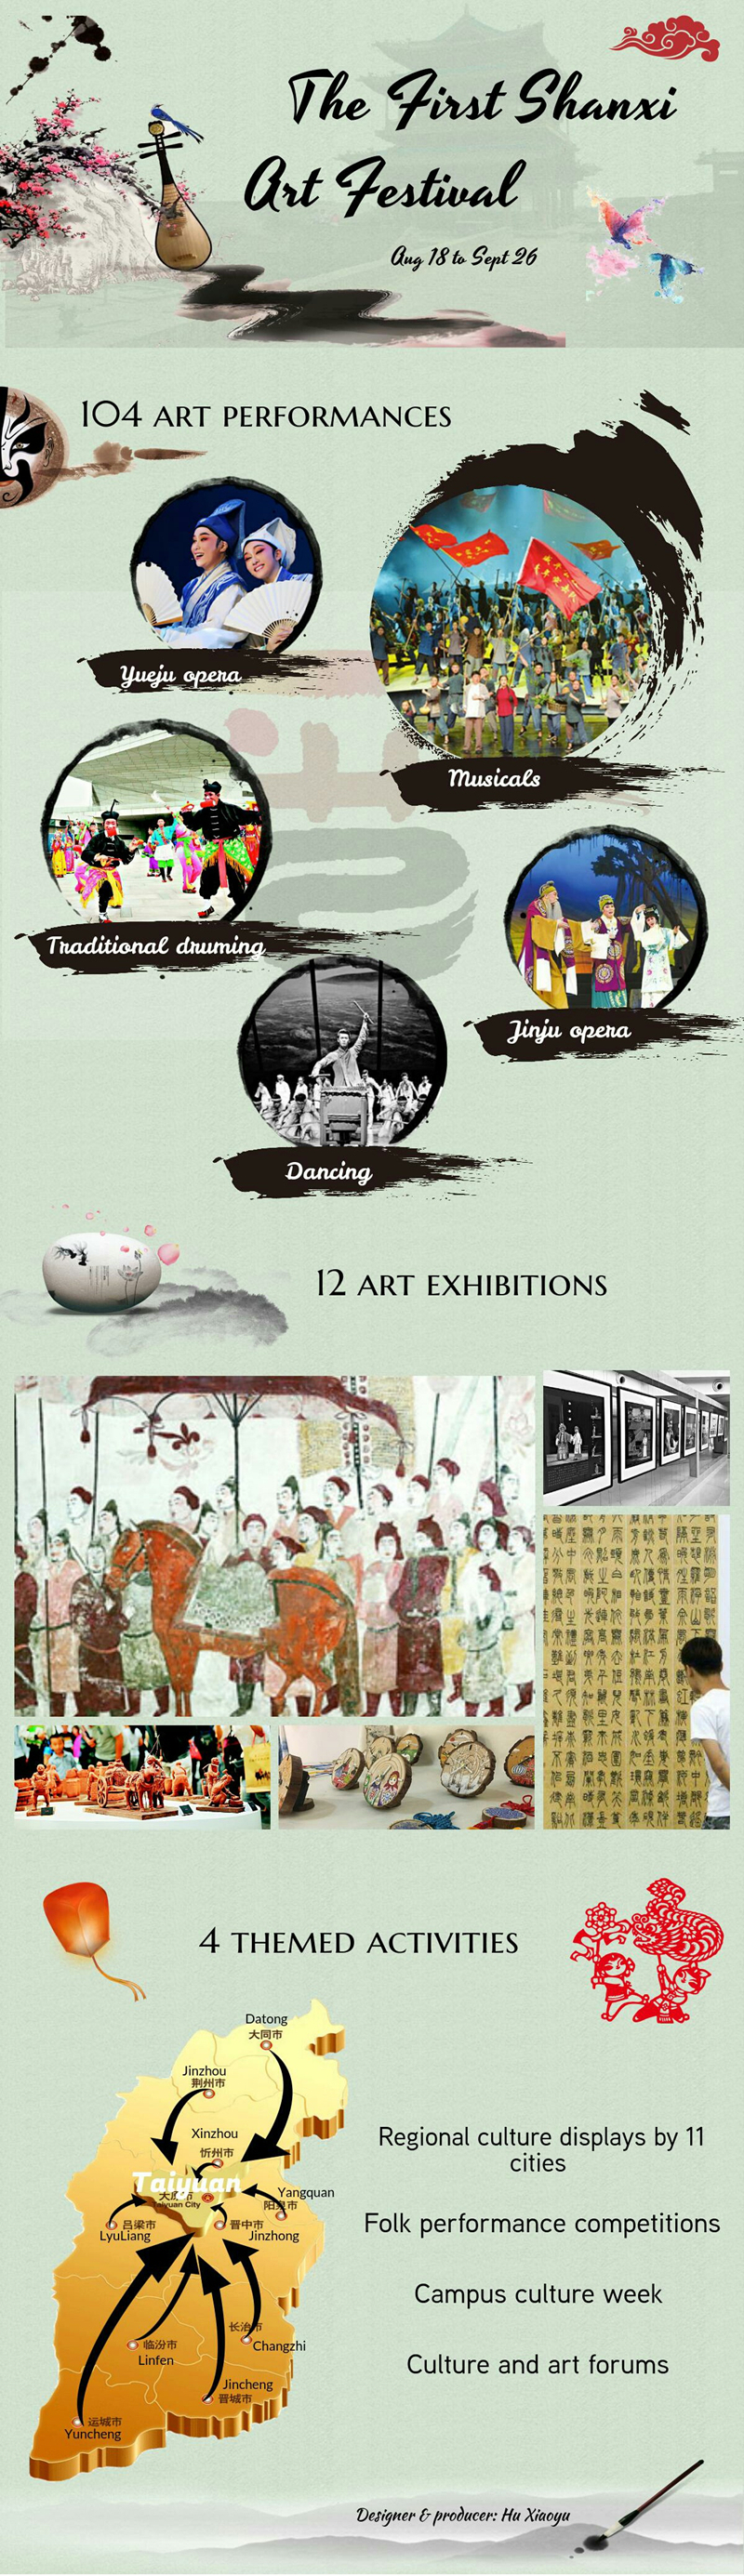 The First Shanxi Art Festival